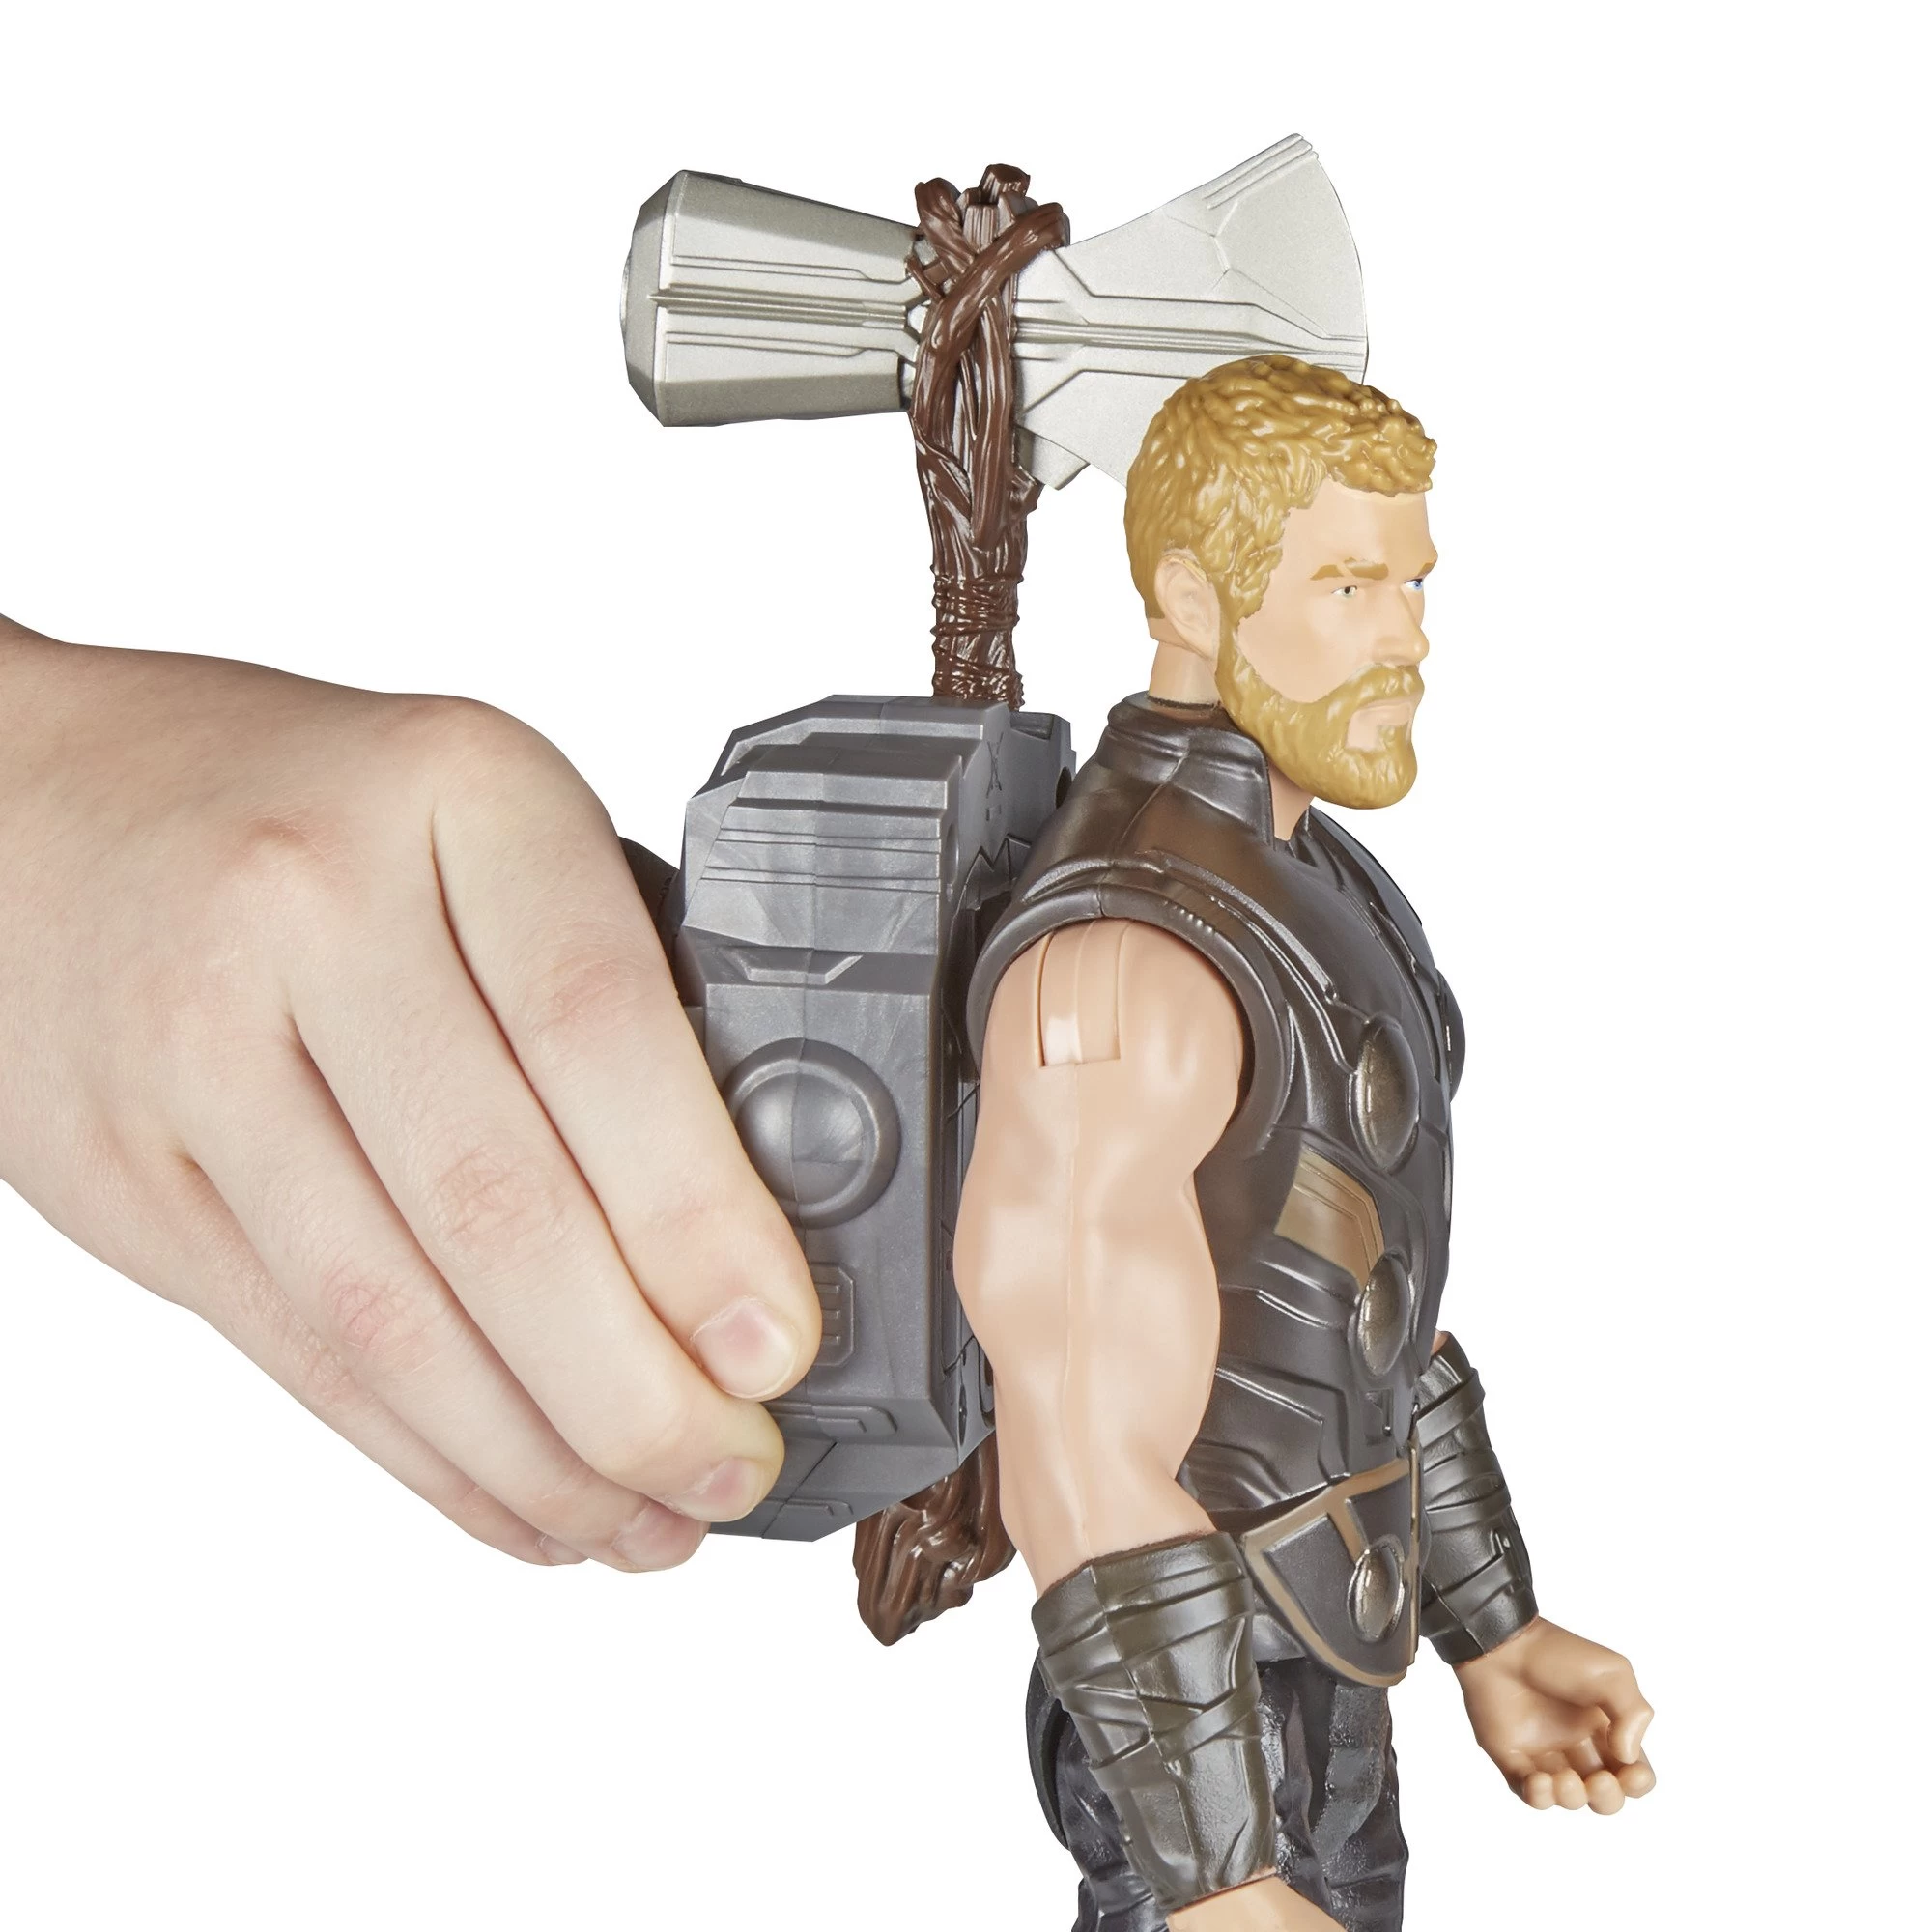 Infinity War Titan Hero Power FX Thor 